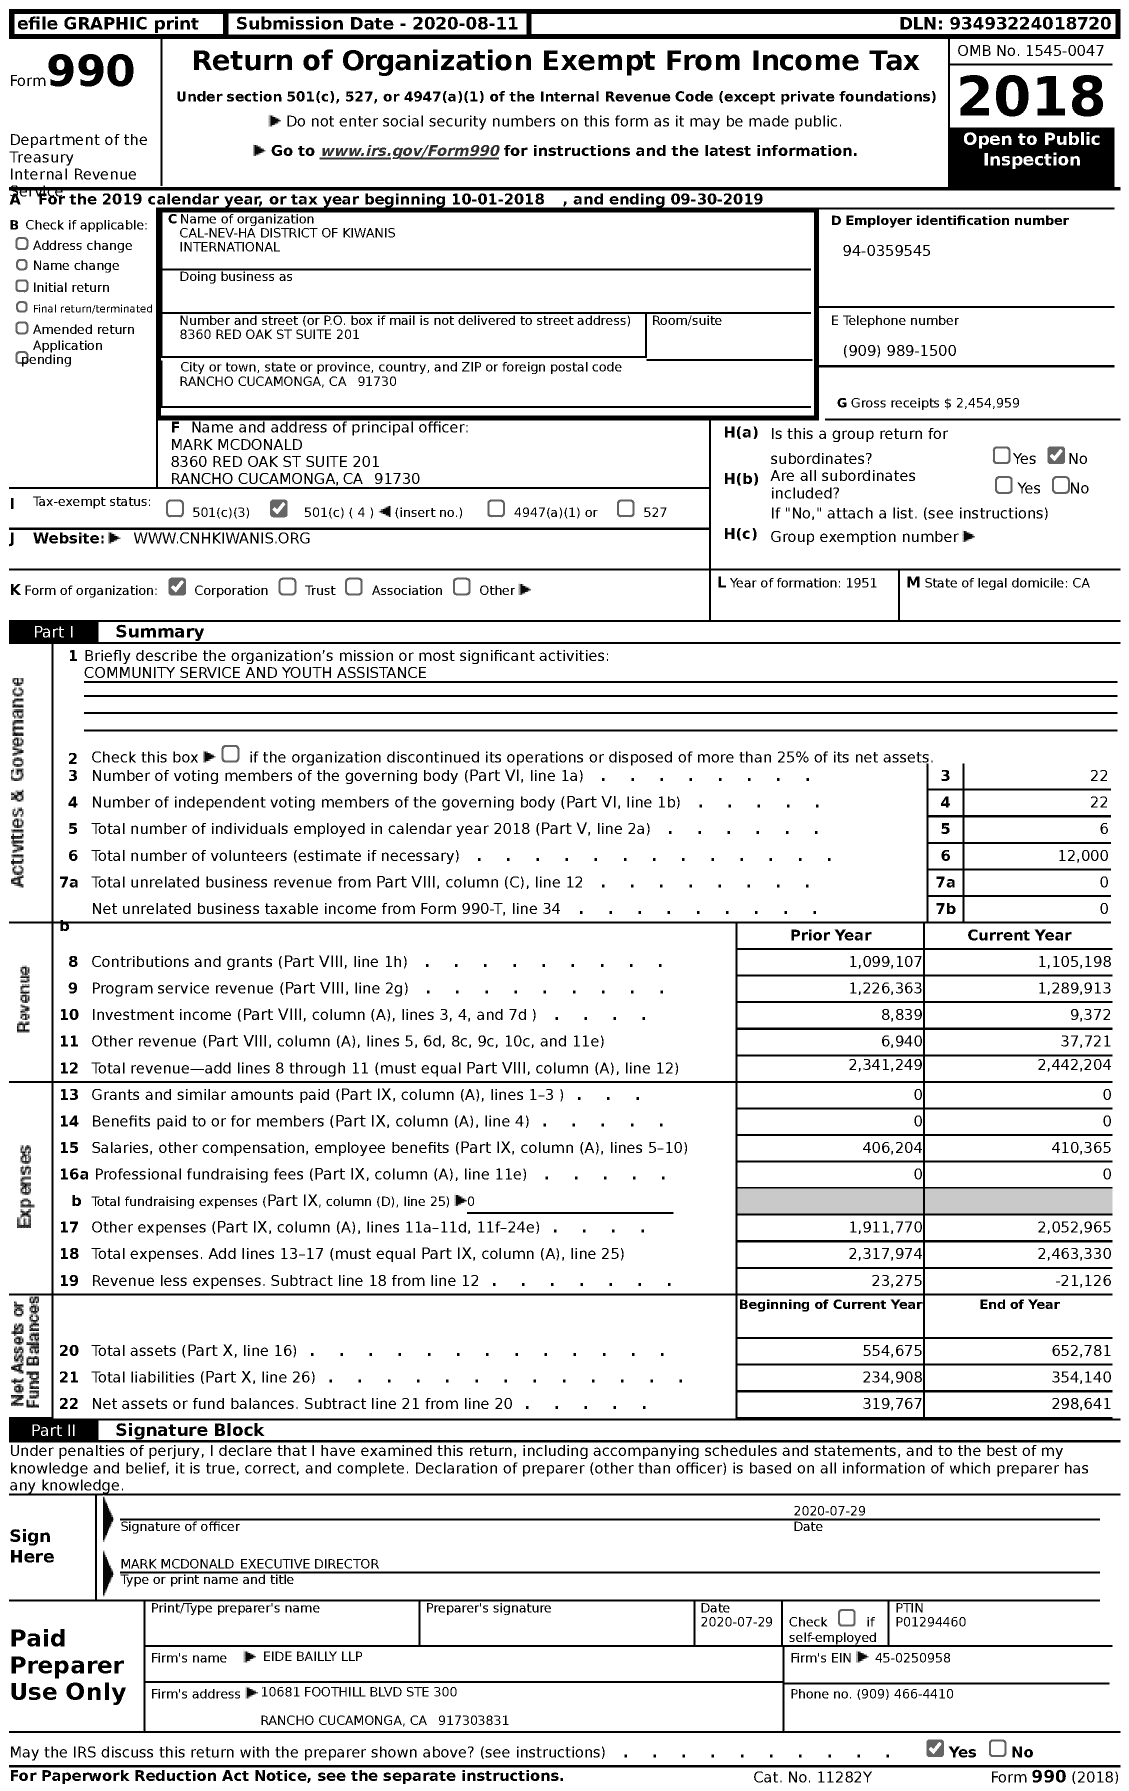 Image of first page of 2018 Form 990 for Kiwanis International - K02 California-Nevada-Hawaii Distri